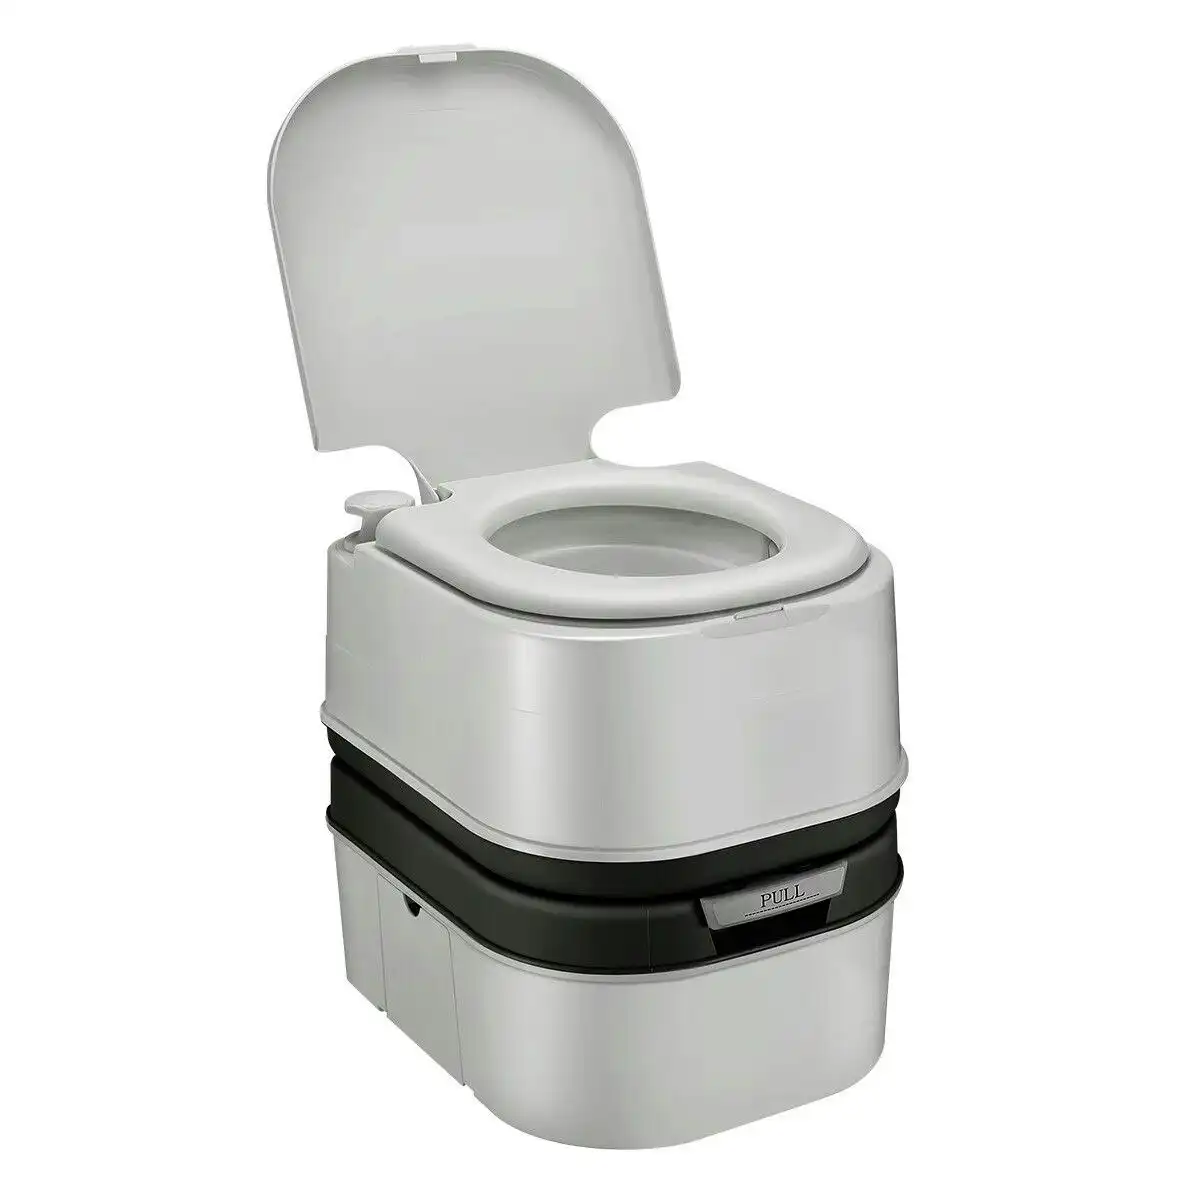 Ausway Portable Toilet Camping Potties Travel Porta Potty Mobile Bathroom Black and Grey 44.5x35x44cm 24L